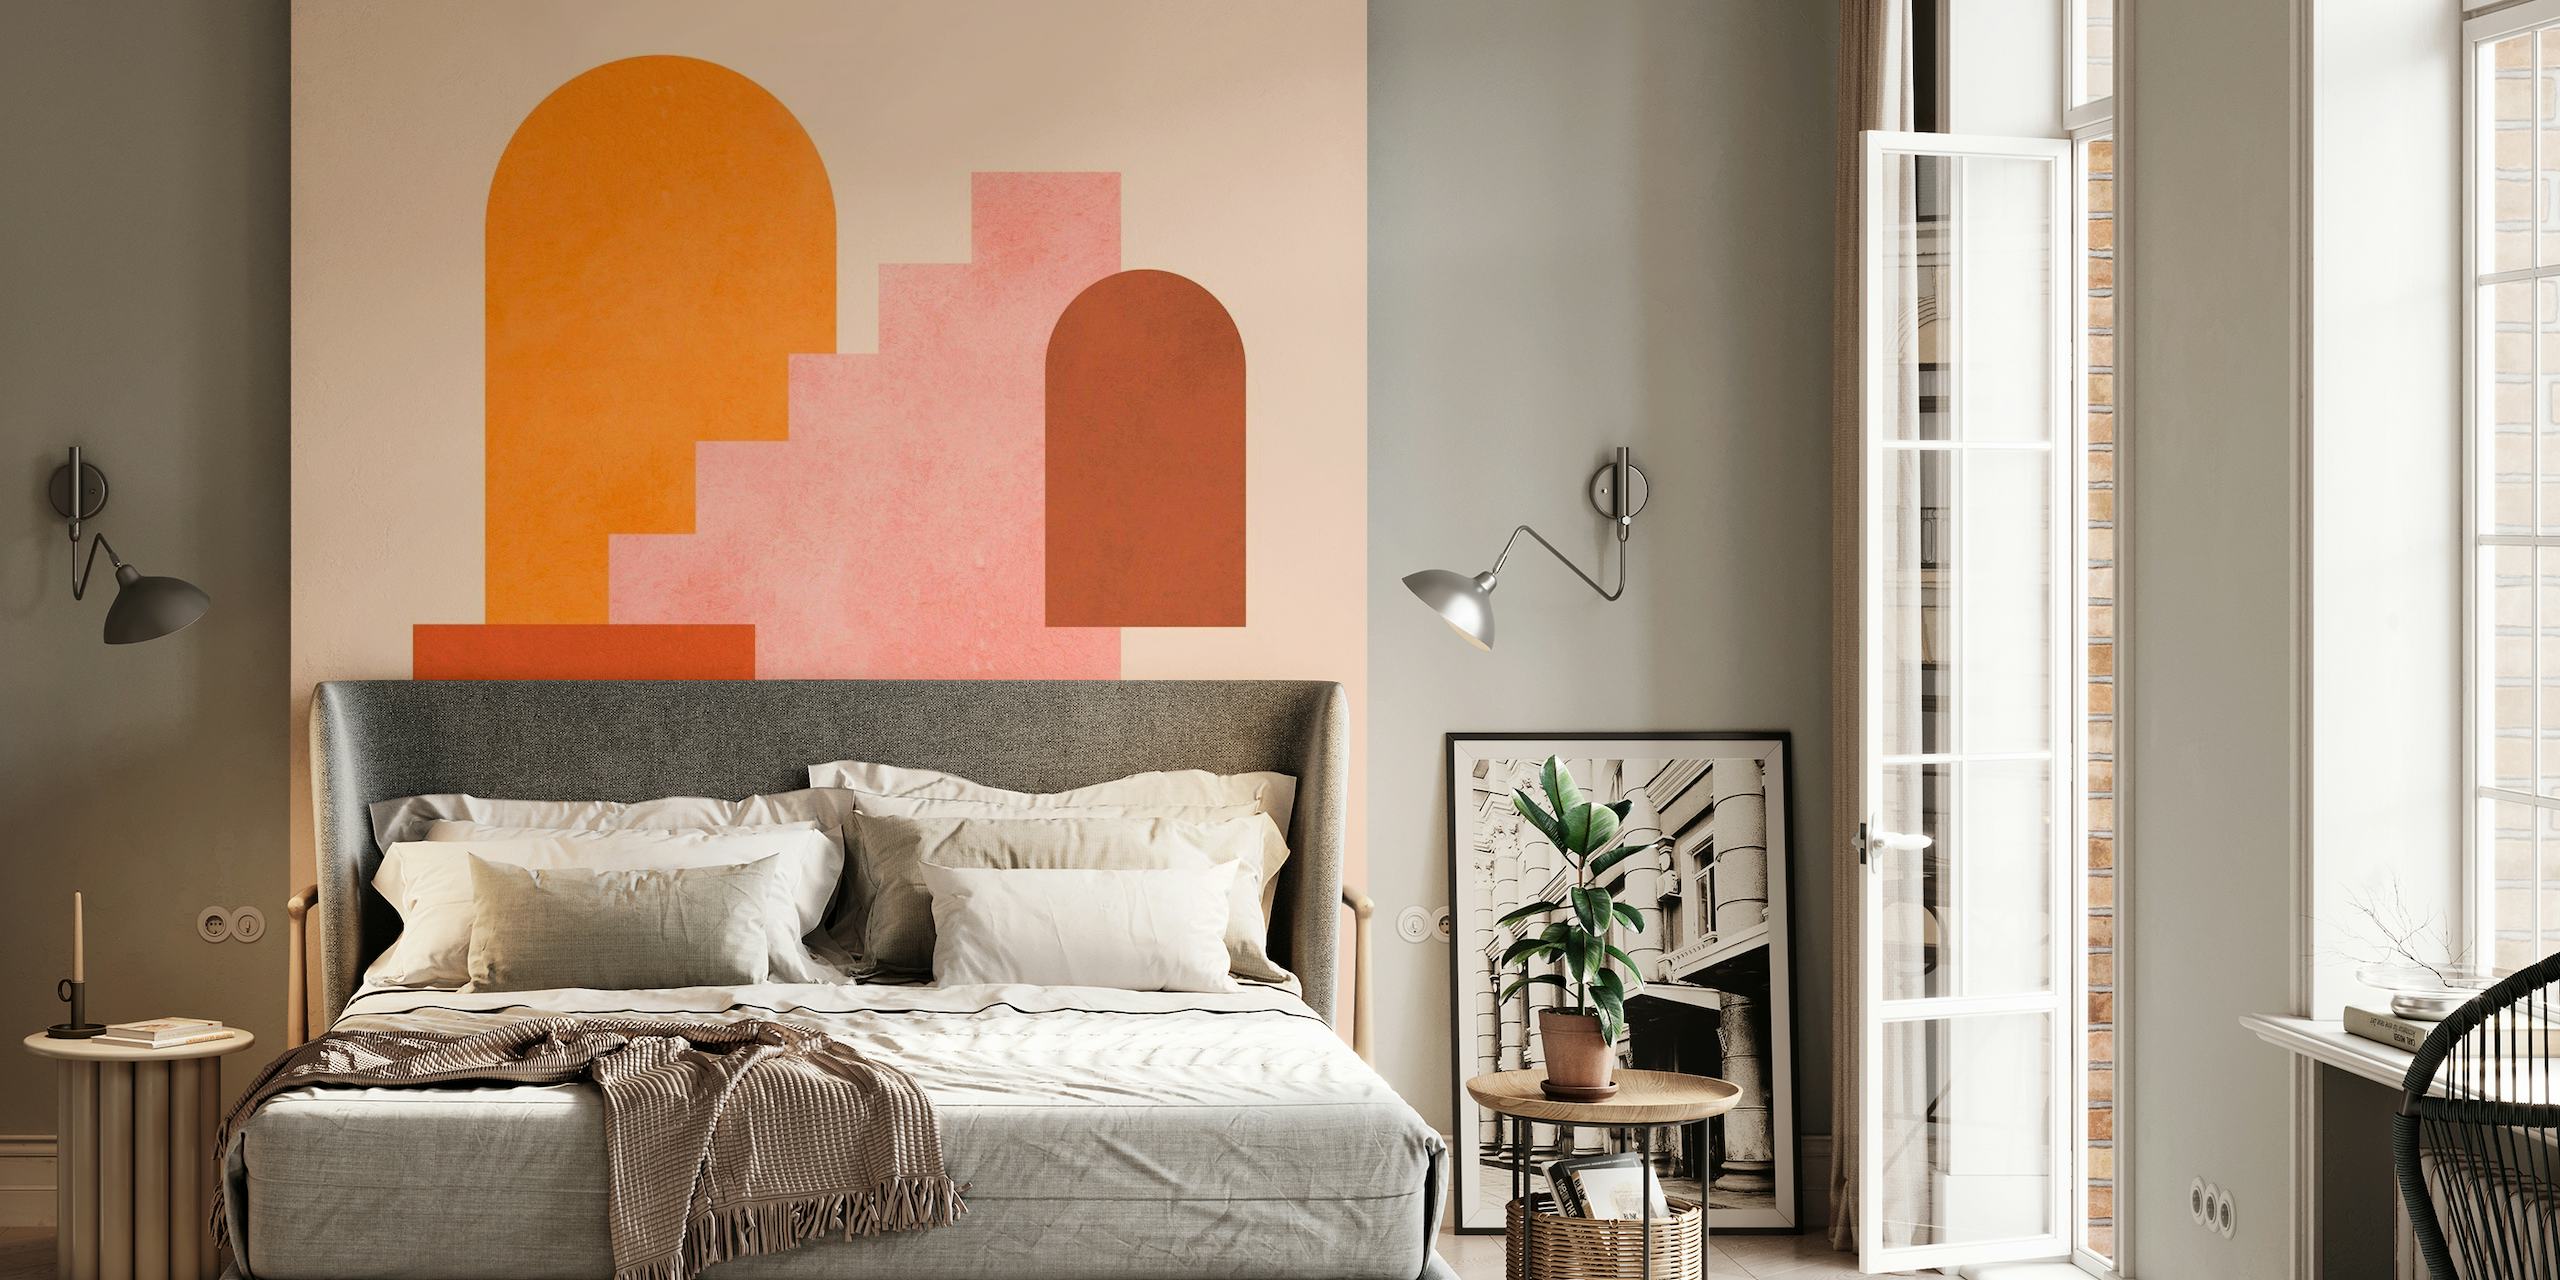 Fotomural de formas geométricas abstractas en tonos naranja, rosa y terracota.